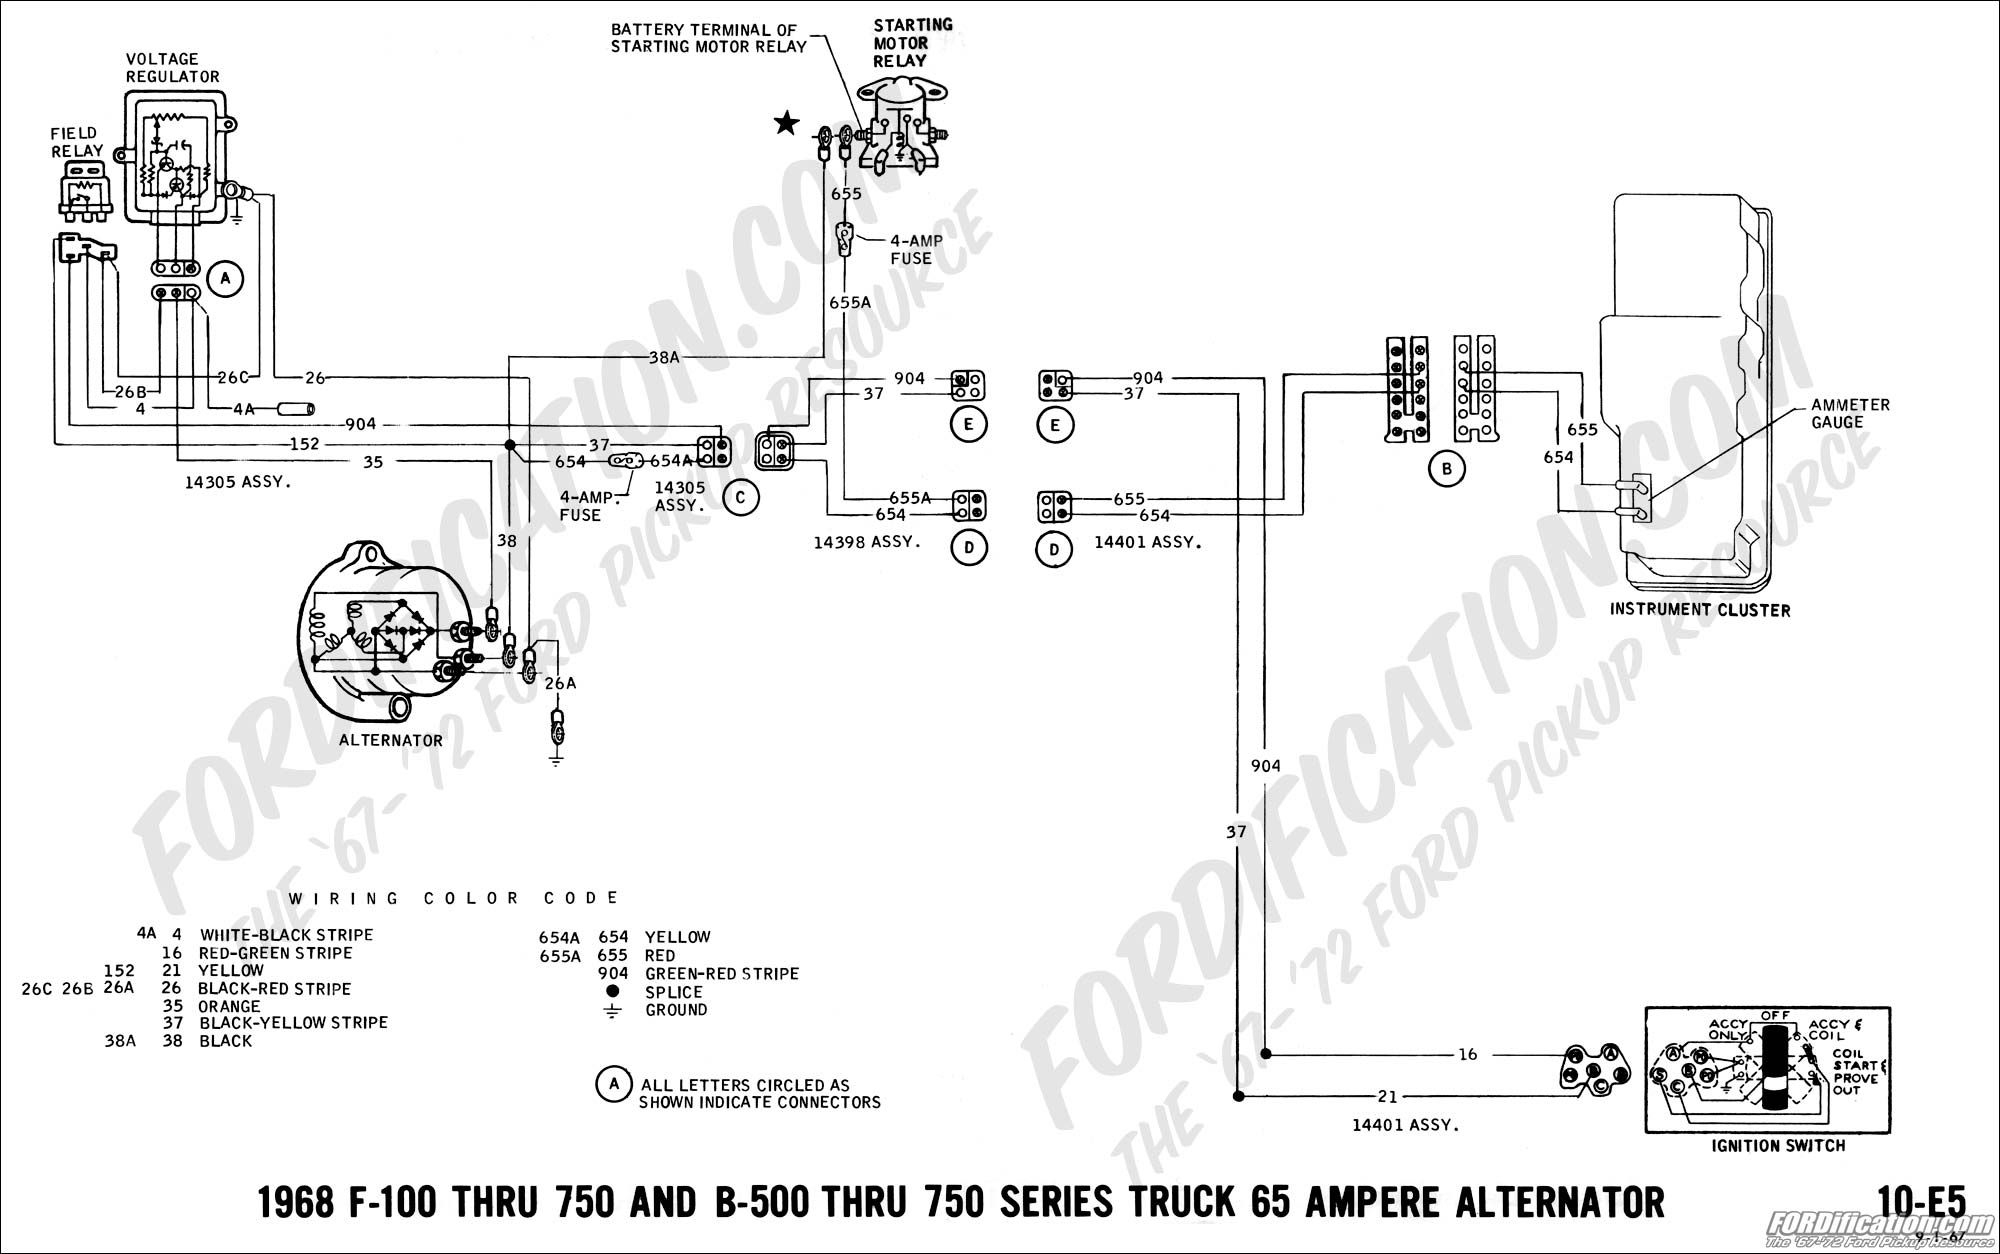 1985 Ford Alternator External Regulator Wiring Diagram - Data Wiring - Ford Alternator Wiring Diagram External Regulator